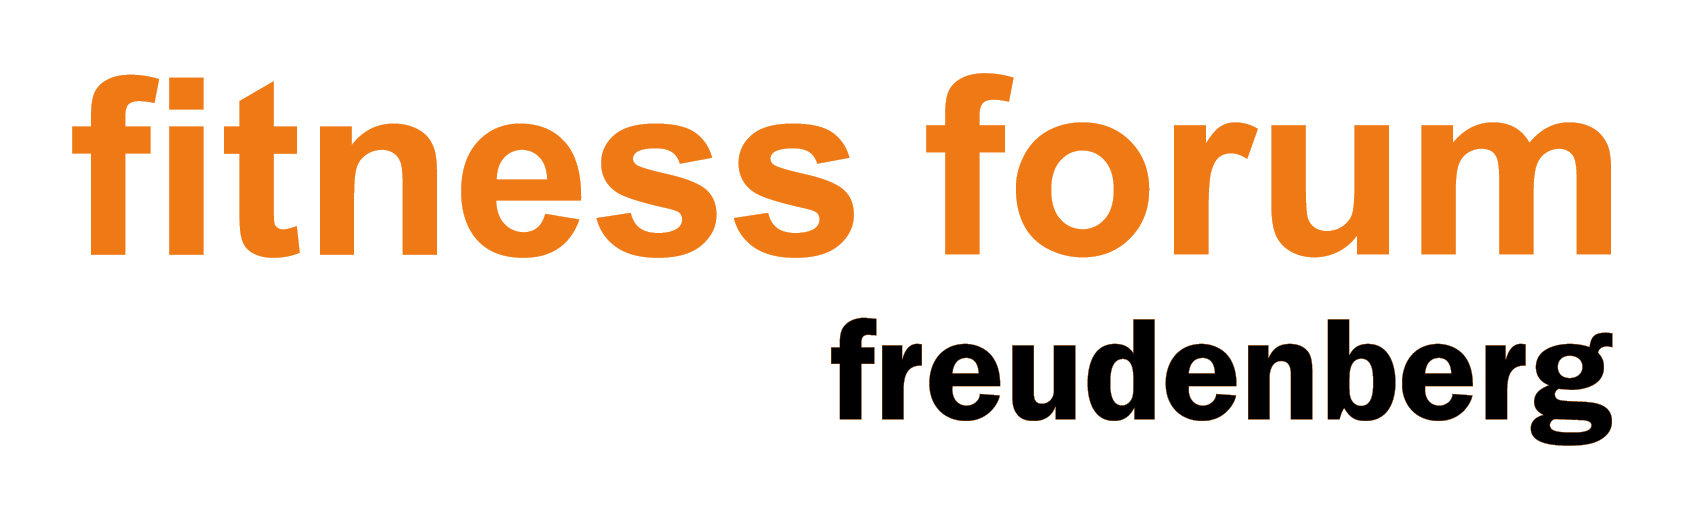 fitness forum - Mitglied in Freudenberg WIRKT e.V.